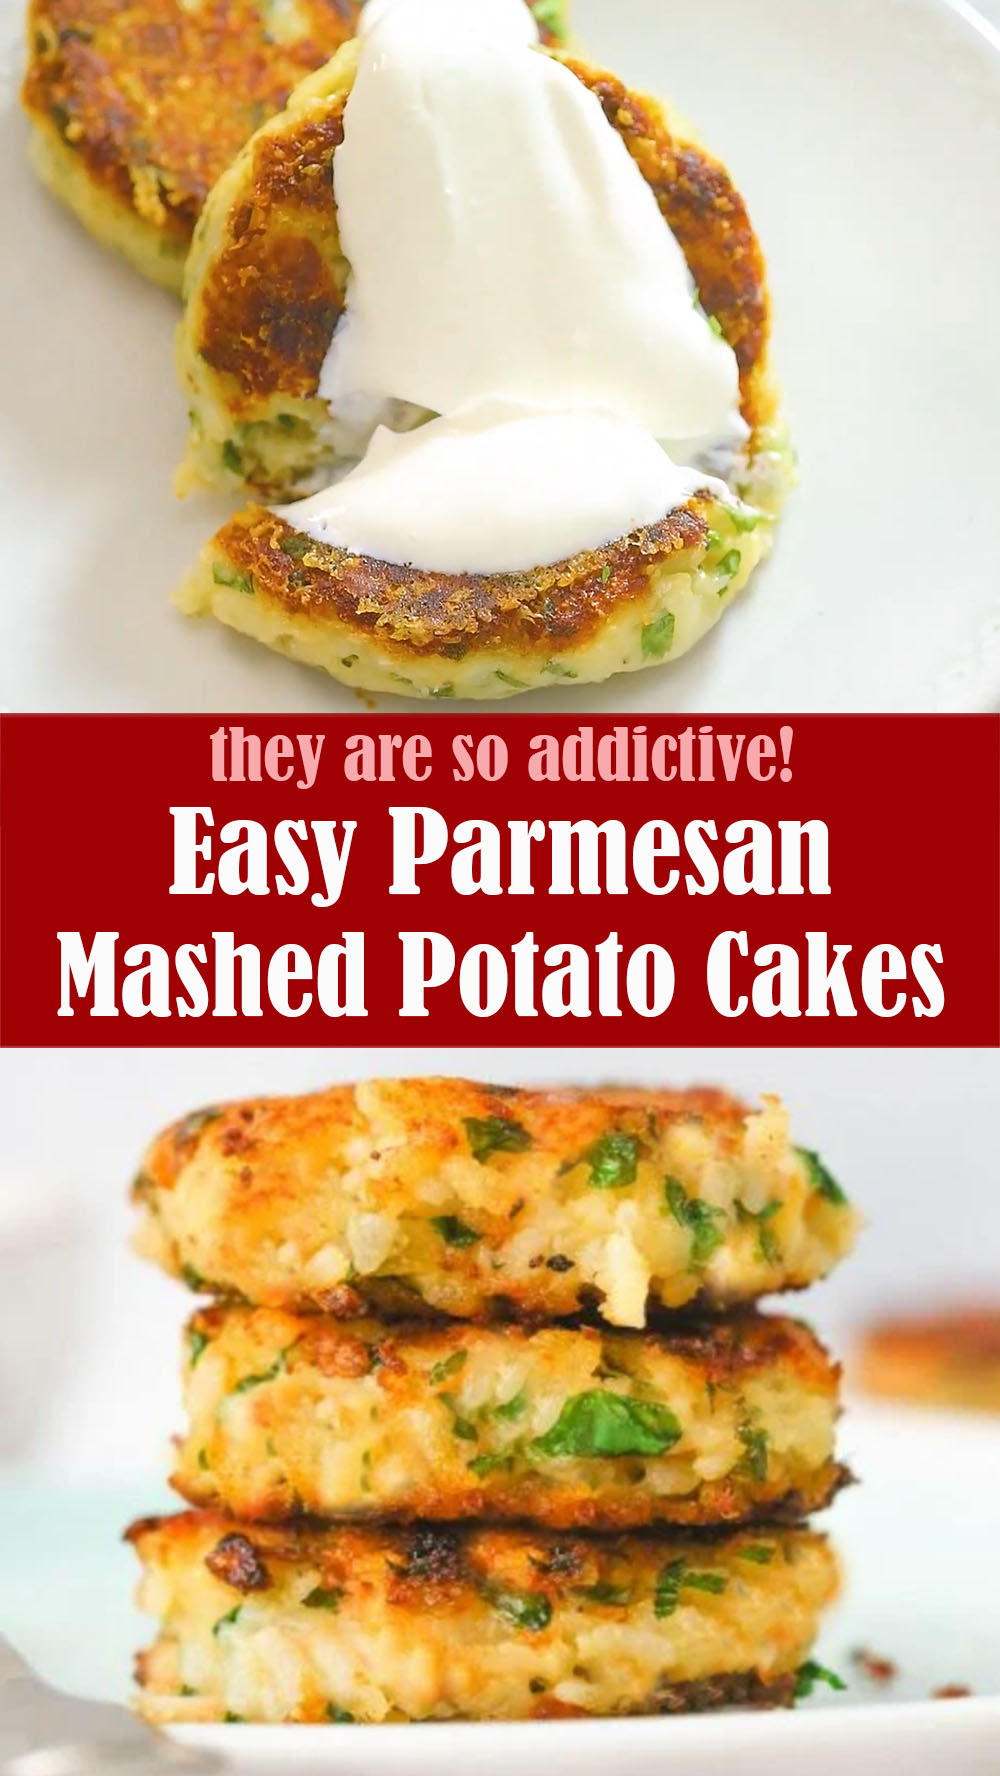 Easy Parmesan Mashed Potato Cakes